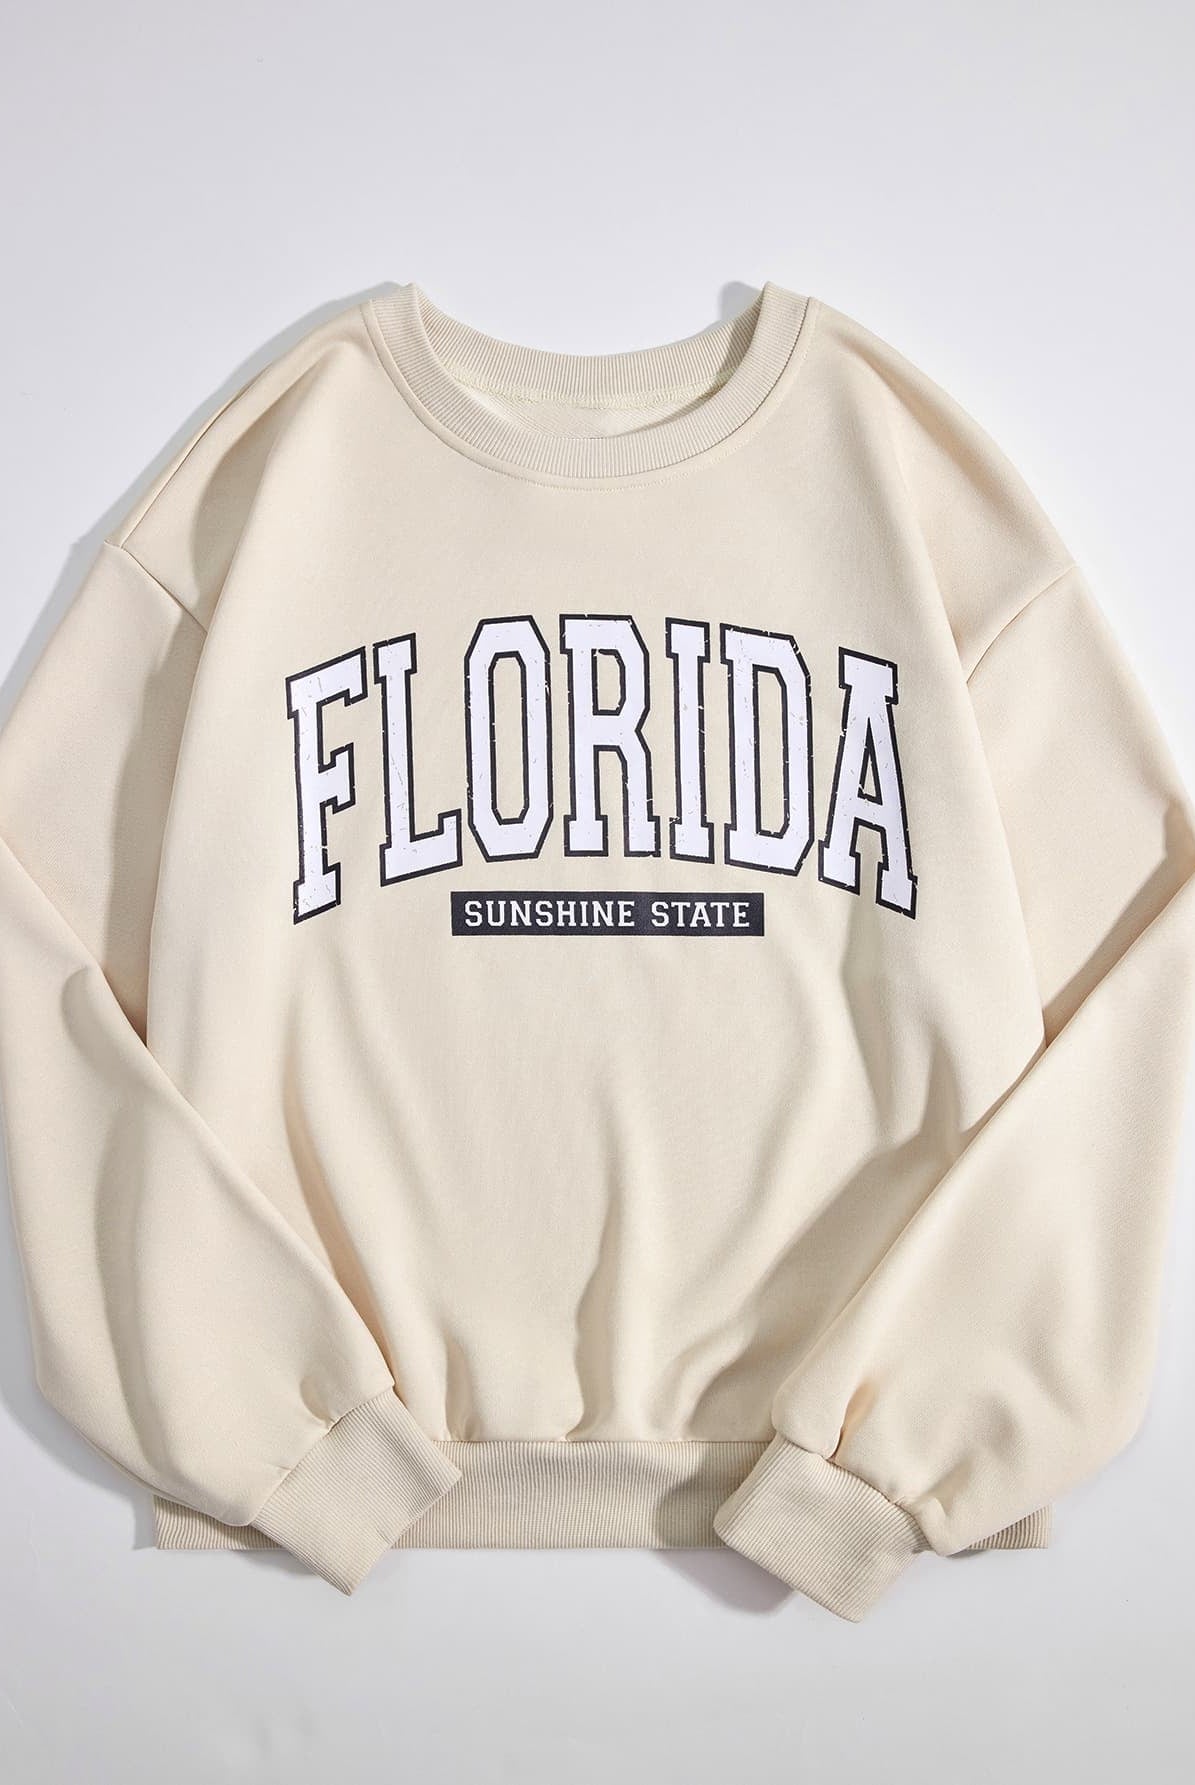 FLORIDA SUNSHINE STATE Dropped Shoulder Sweatshirt - GemThreads Boutique